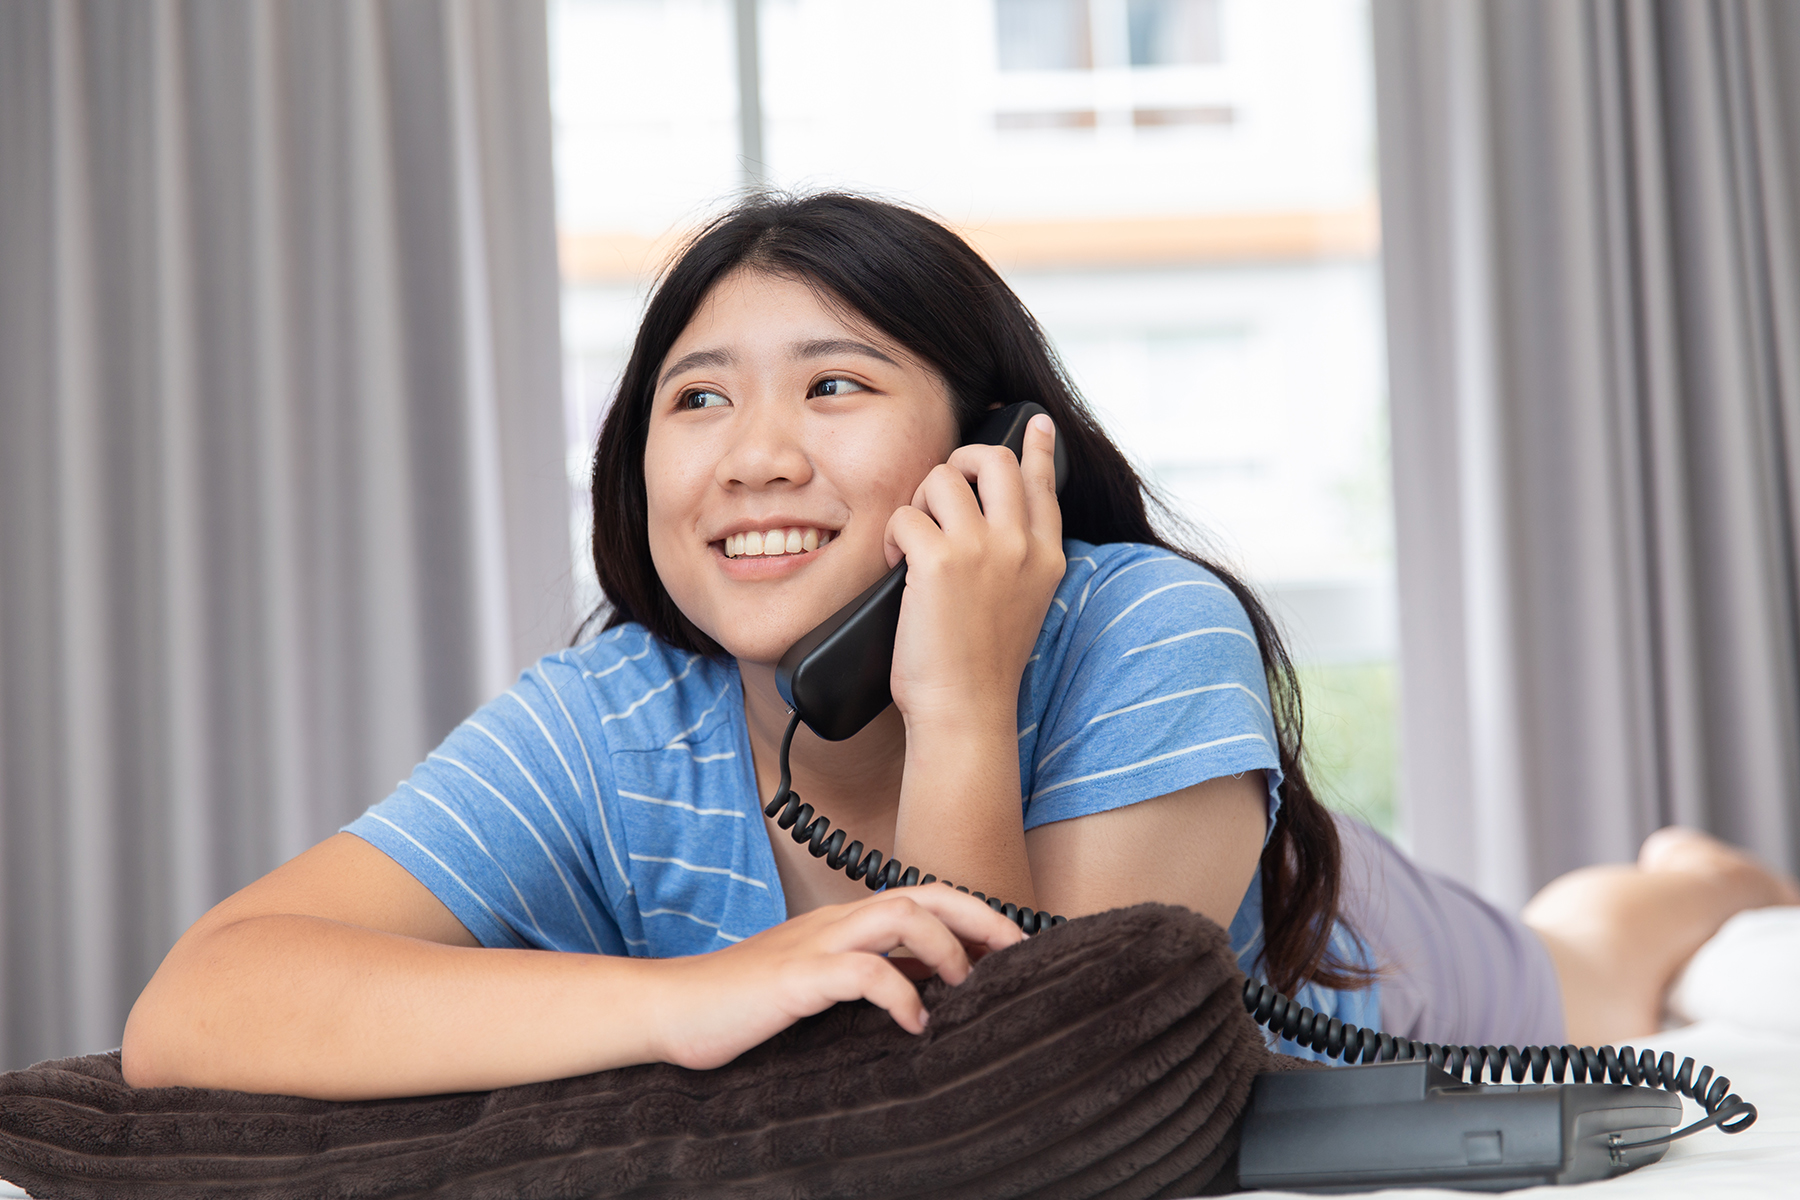 Smiling woman on a landline phone